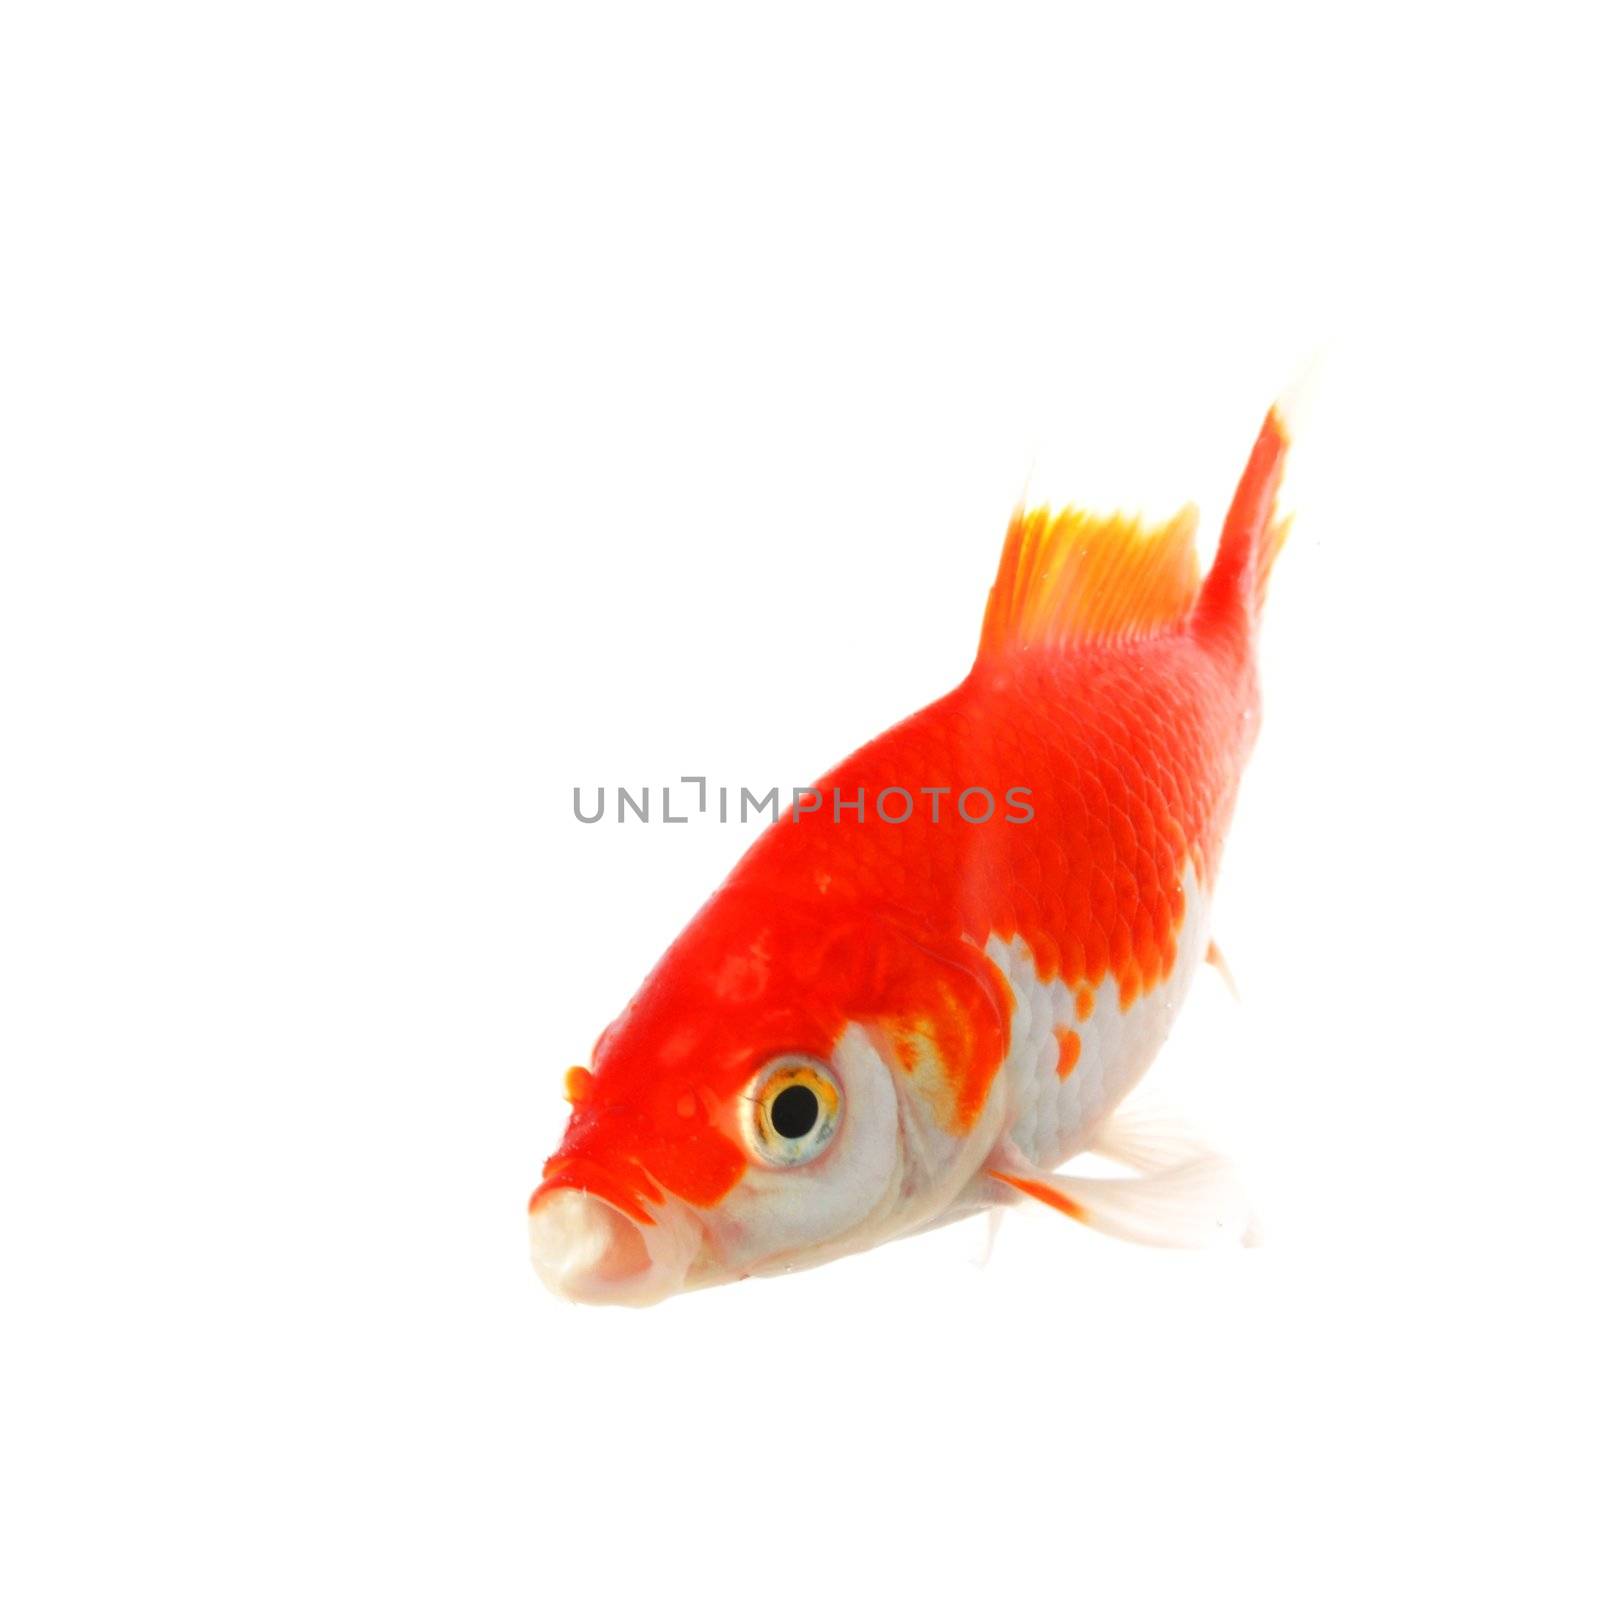 goldfish macro isolated on white background showing pet or animal concept